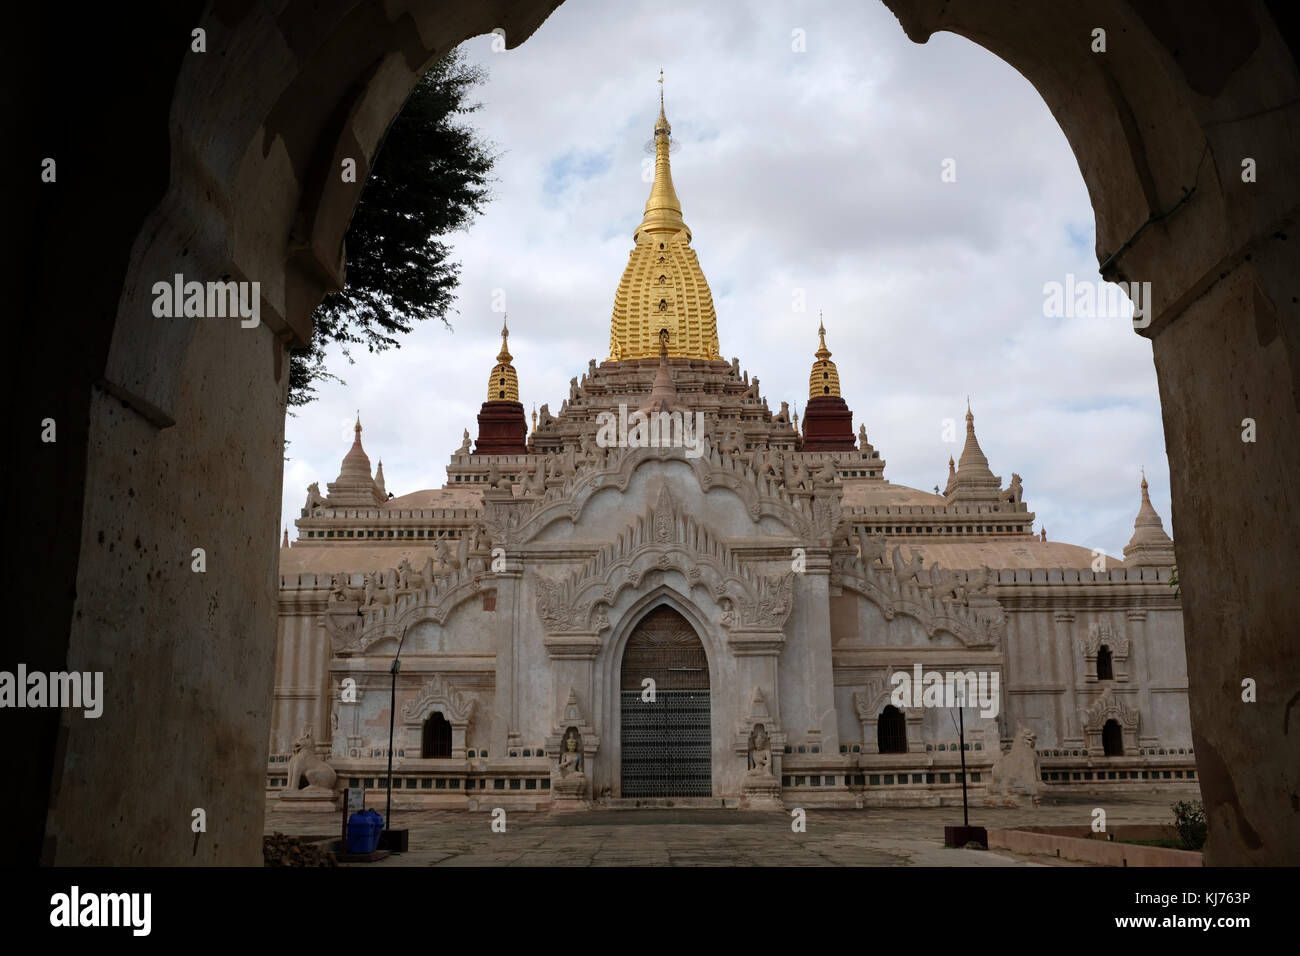 The Ananda Temple in Bagan, Myanmar Stock Photo